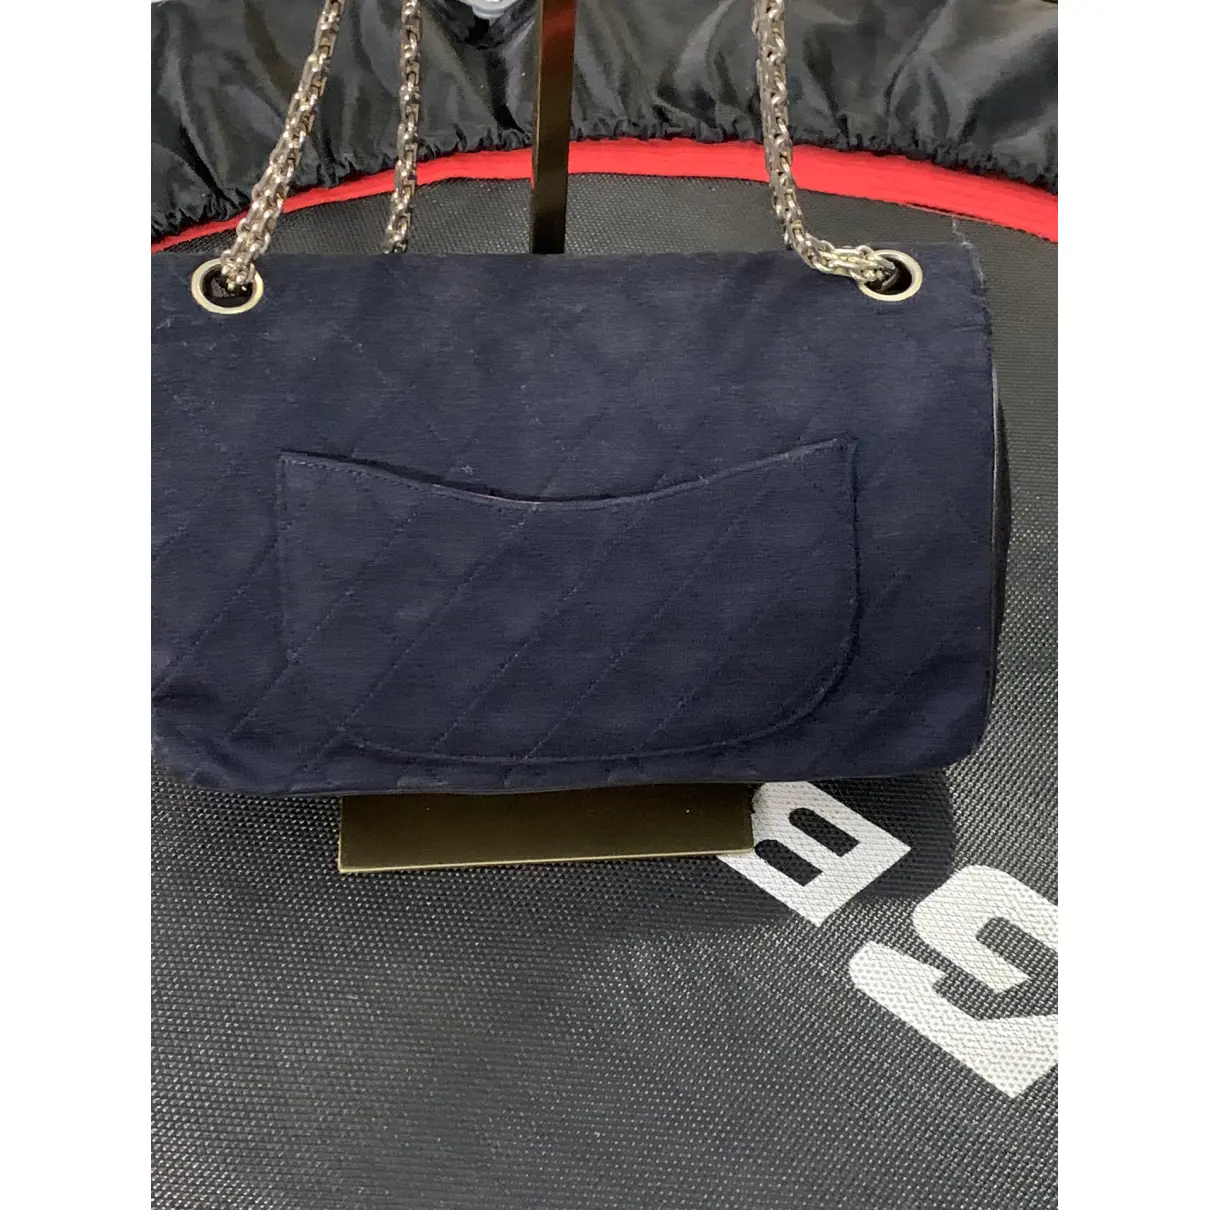 Buy Chanel Timeless/Classique cloth satchel online - Vintage